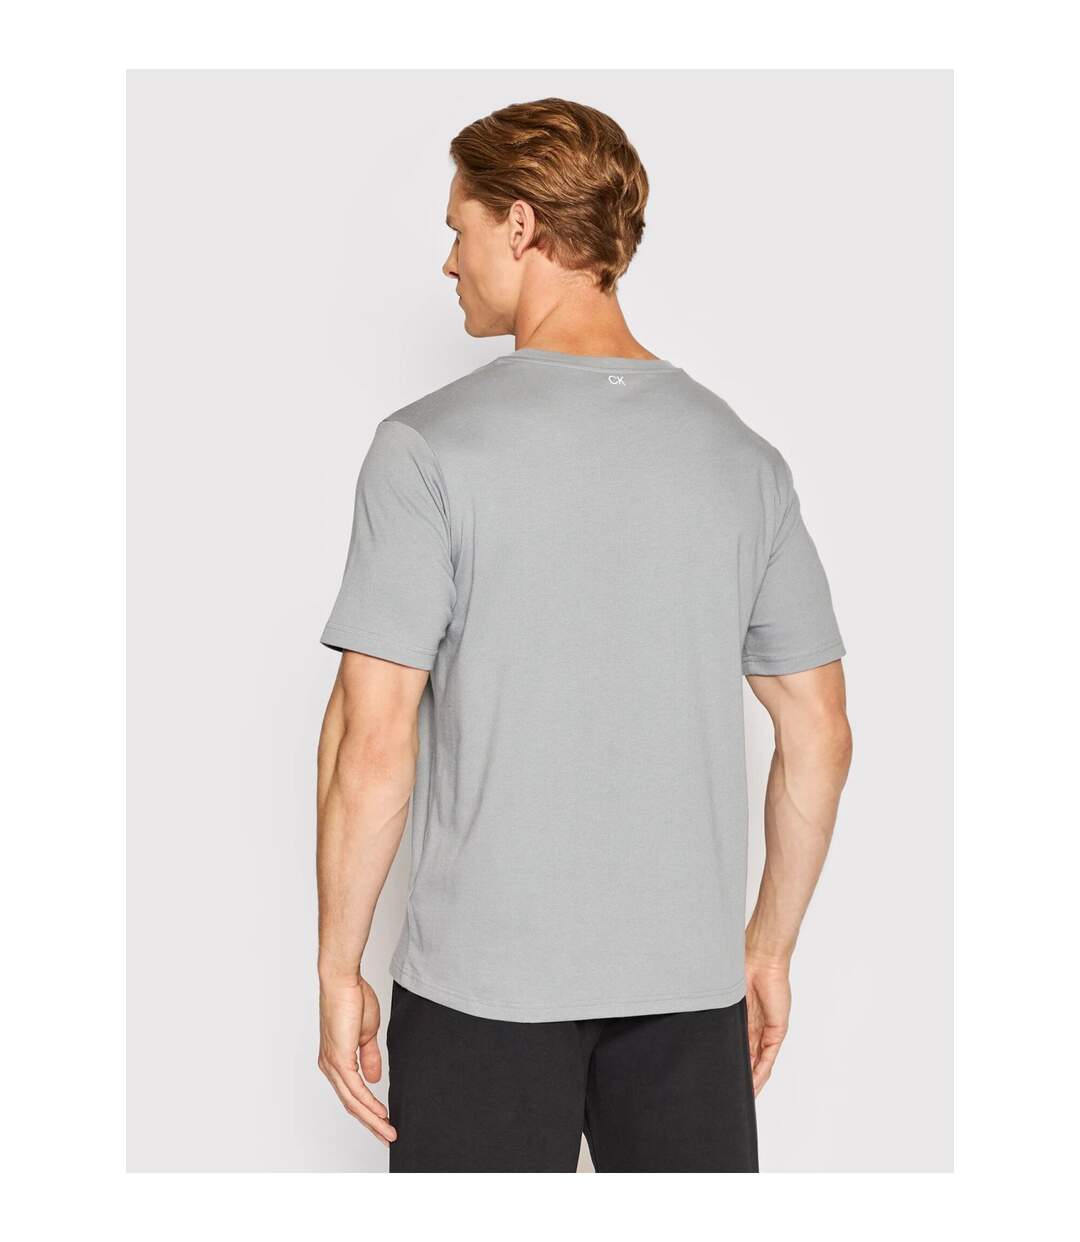 Tee shirt de sport stretch logo réfléchisant  -  Calvin klein - Homme